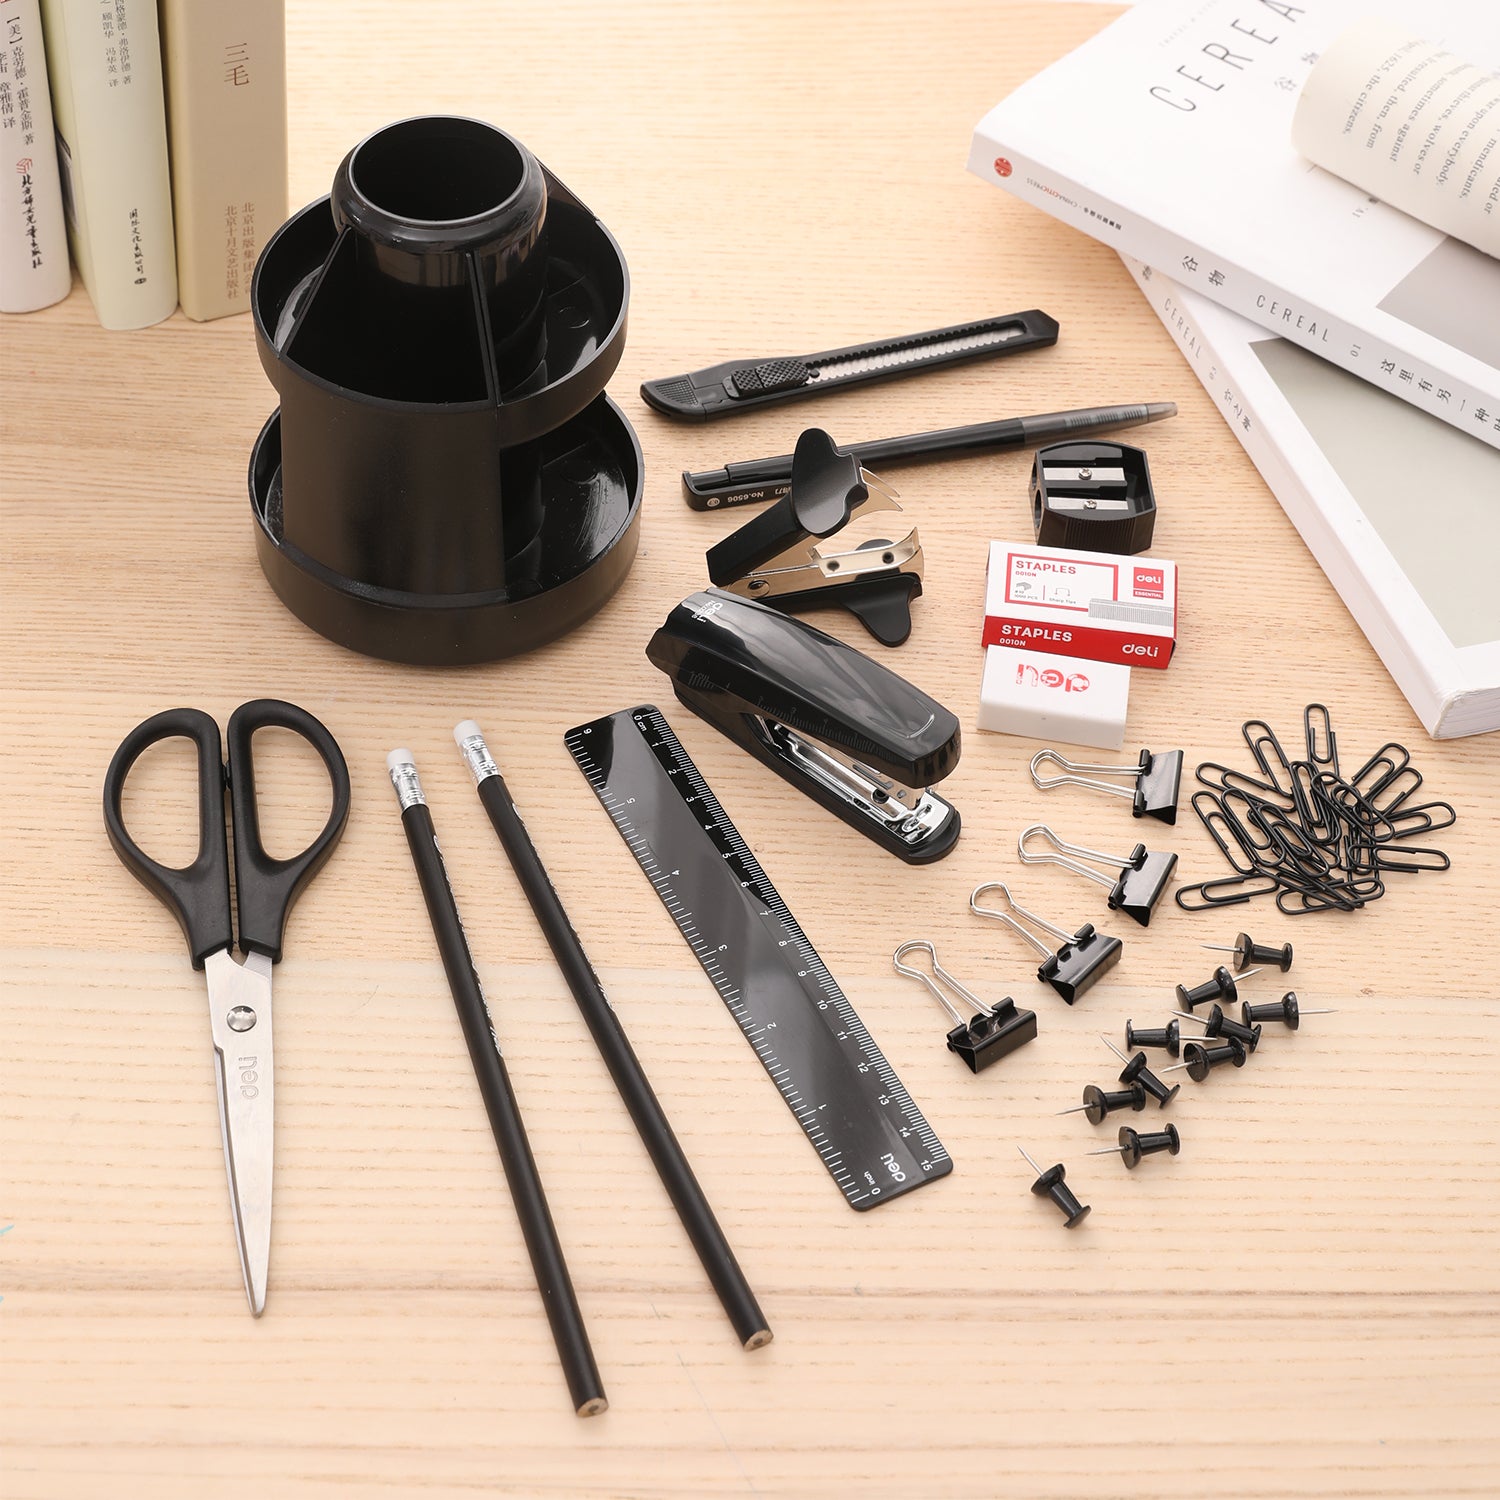 Deli 15 Pcs Office Supplies Kit with Desk Organizer Scissors Staple Remover Sharpener Binder Clips Desk Accessories Set with Staple 